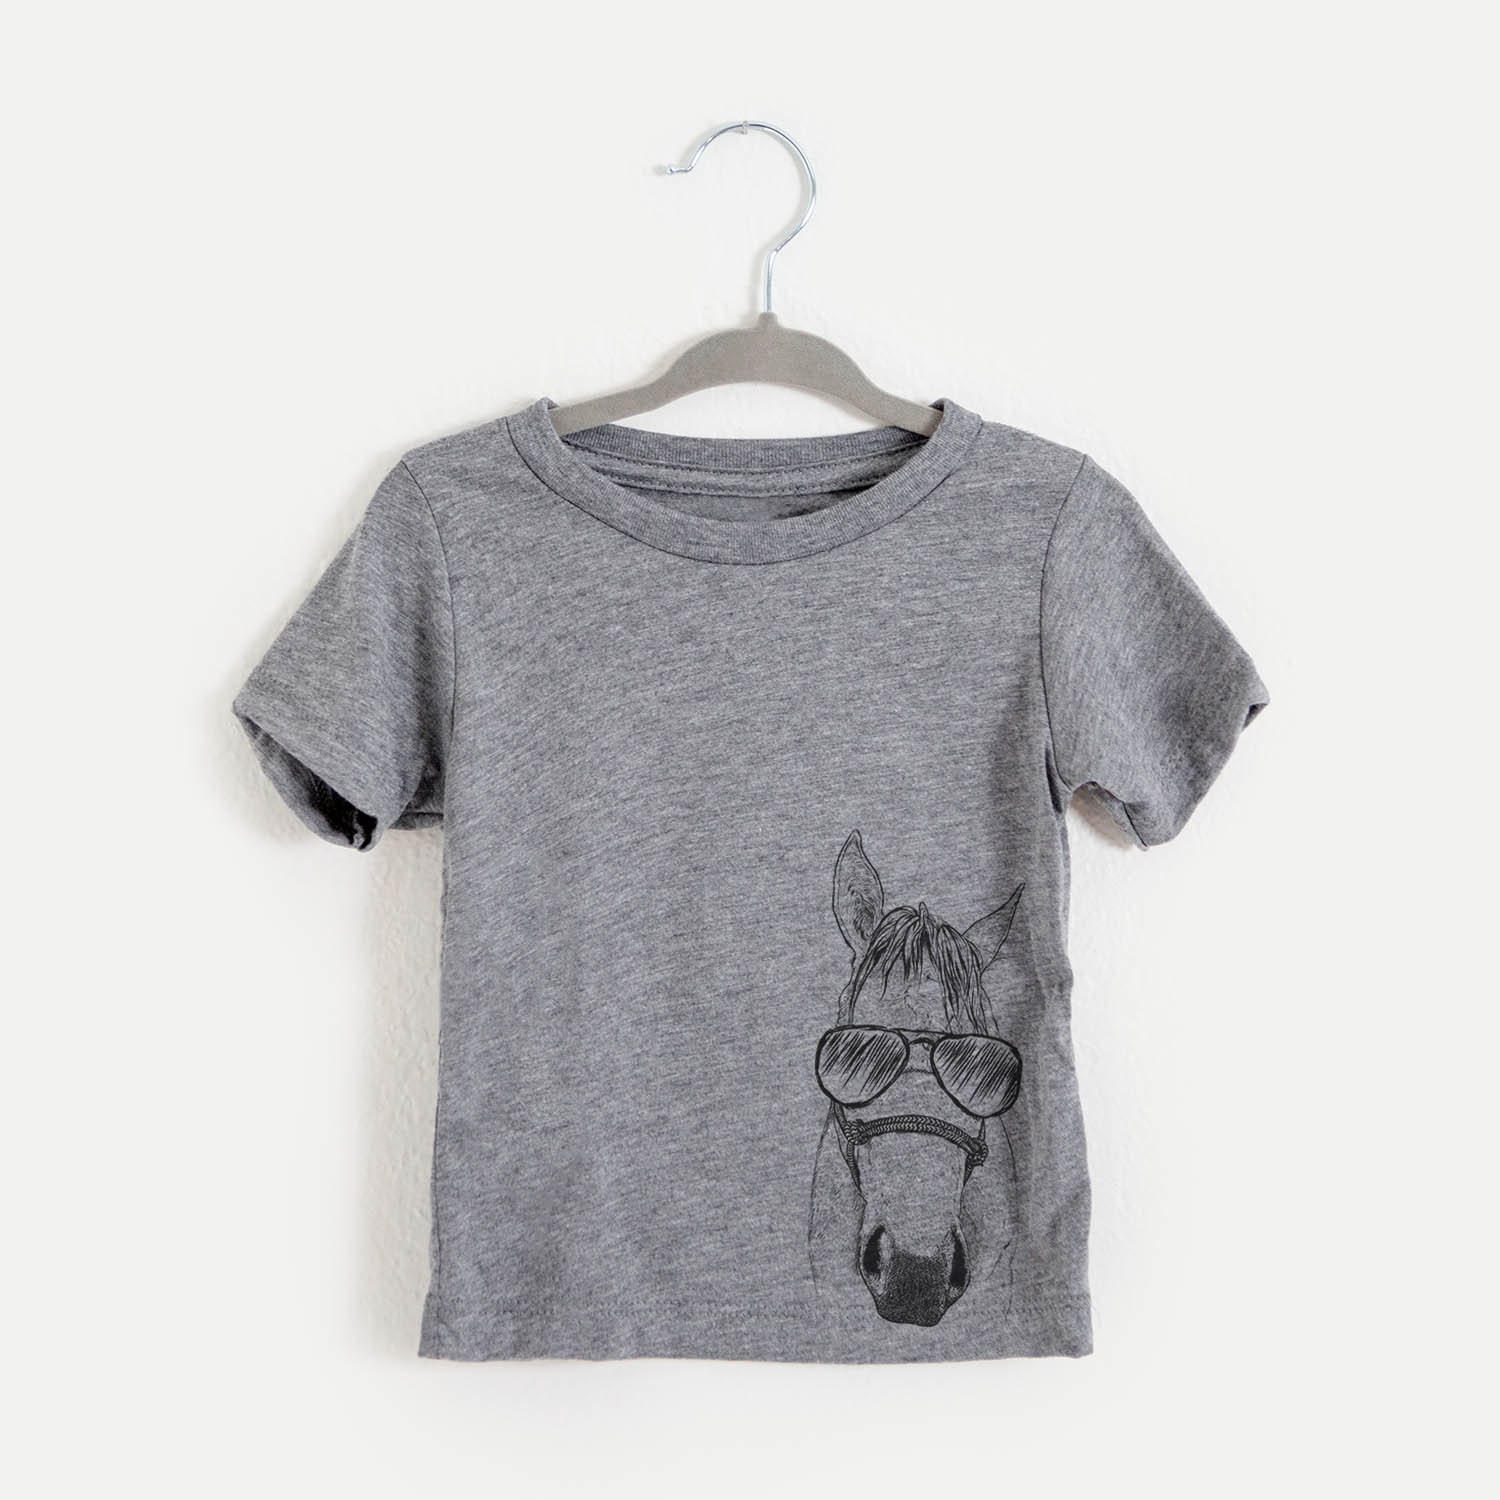 Quarter horse tshirt